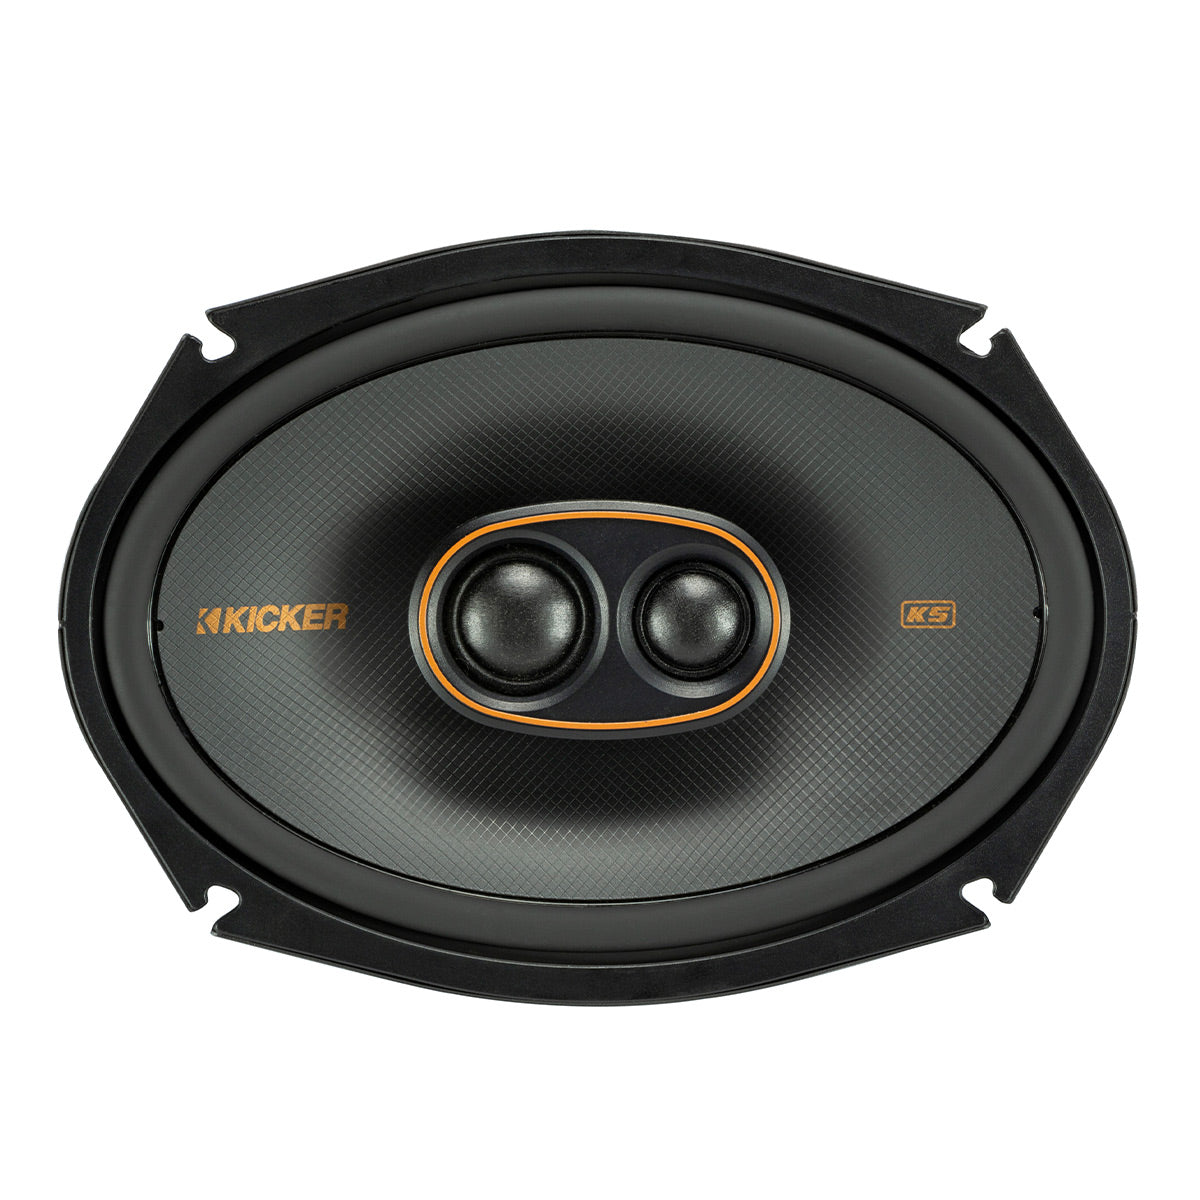 Kicker KSC6930 6x9" KS Series Triaxial Speakers - Pair